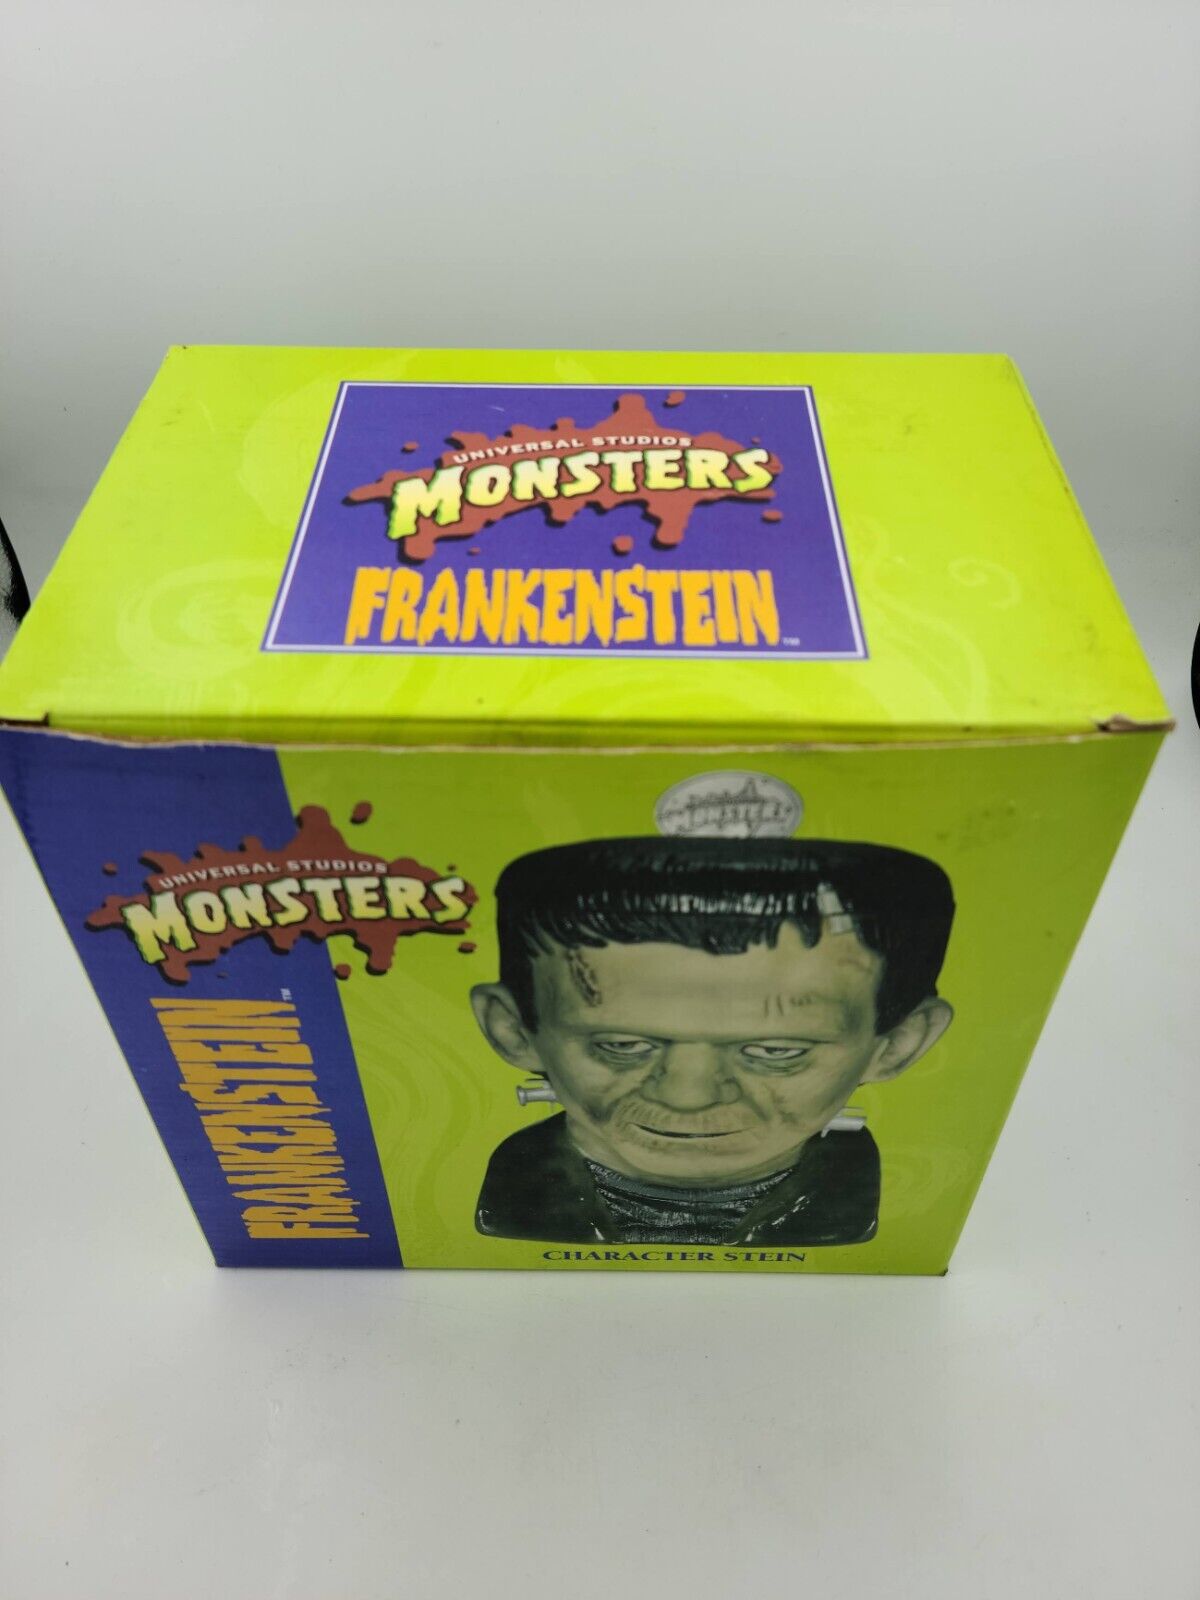 1999 Universal Studios Monsters FRANKENSTEIN Character Stein Boris Karloff